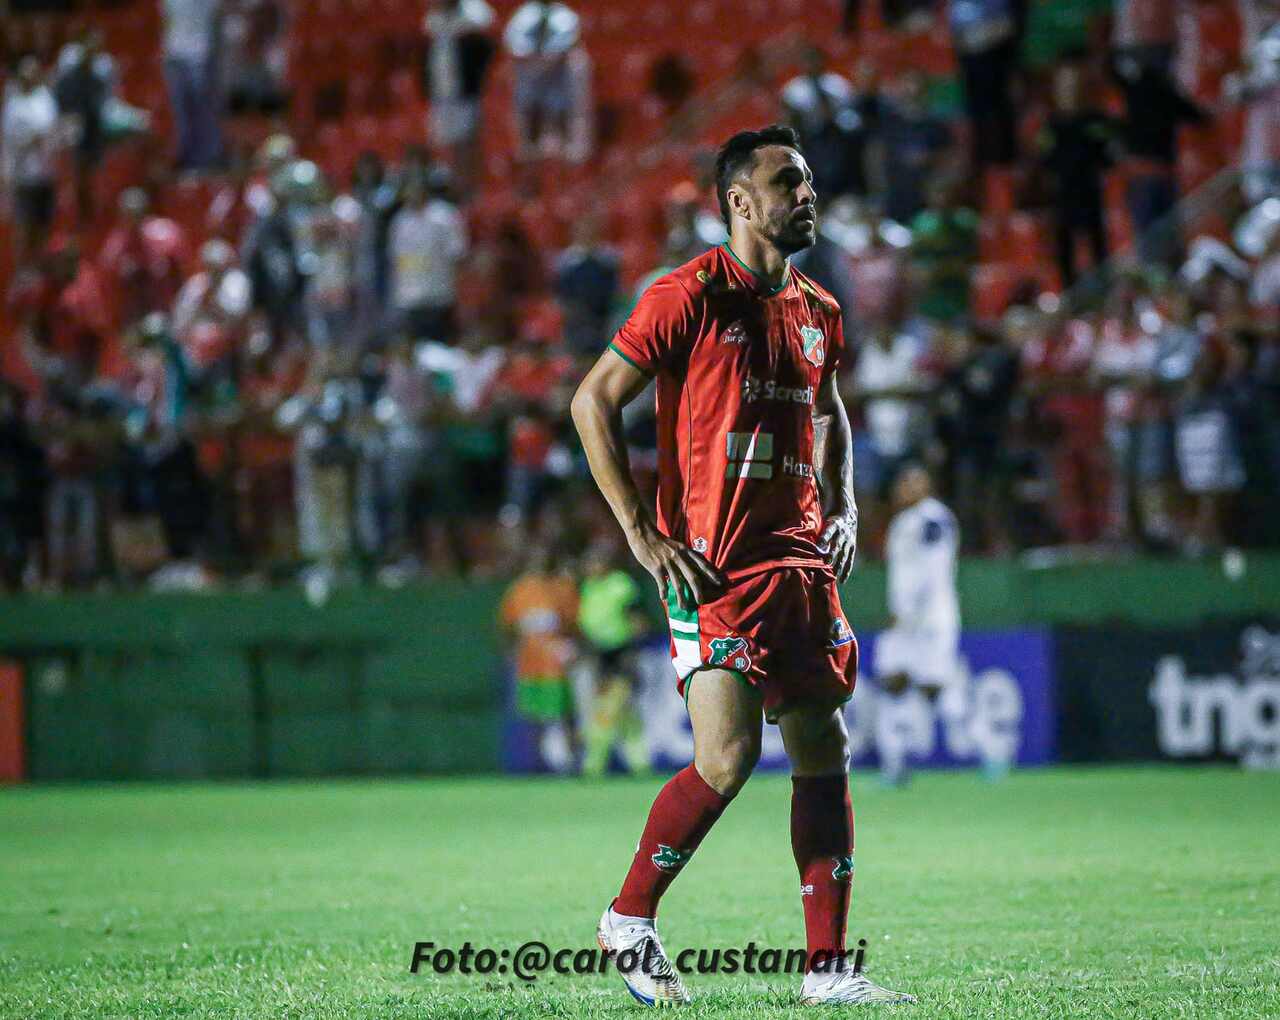 B9FhFS4L Caio Mancha celebra gol e classificacao do Velo Clube